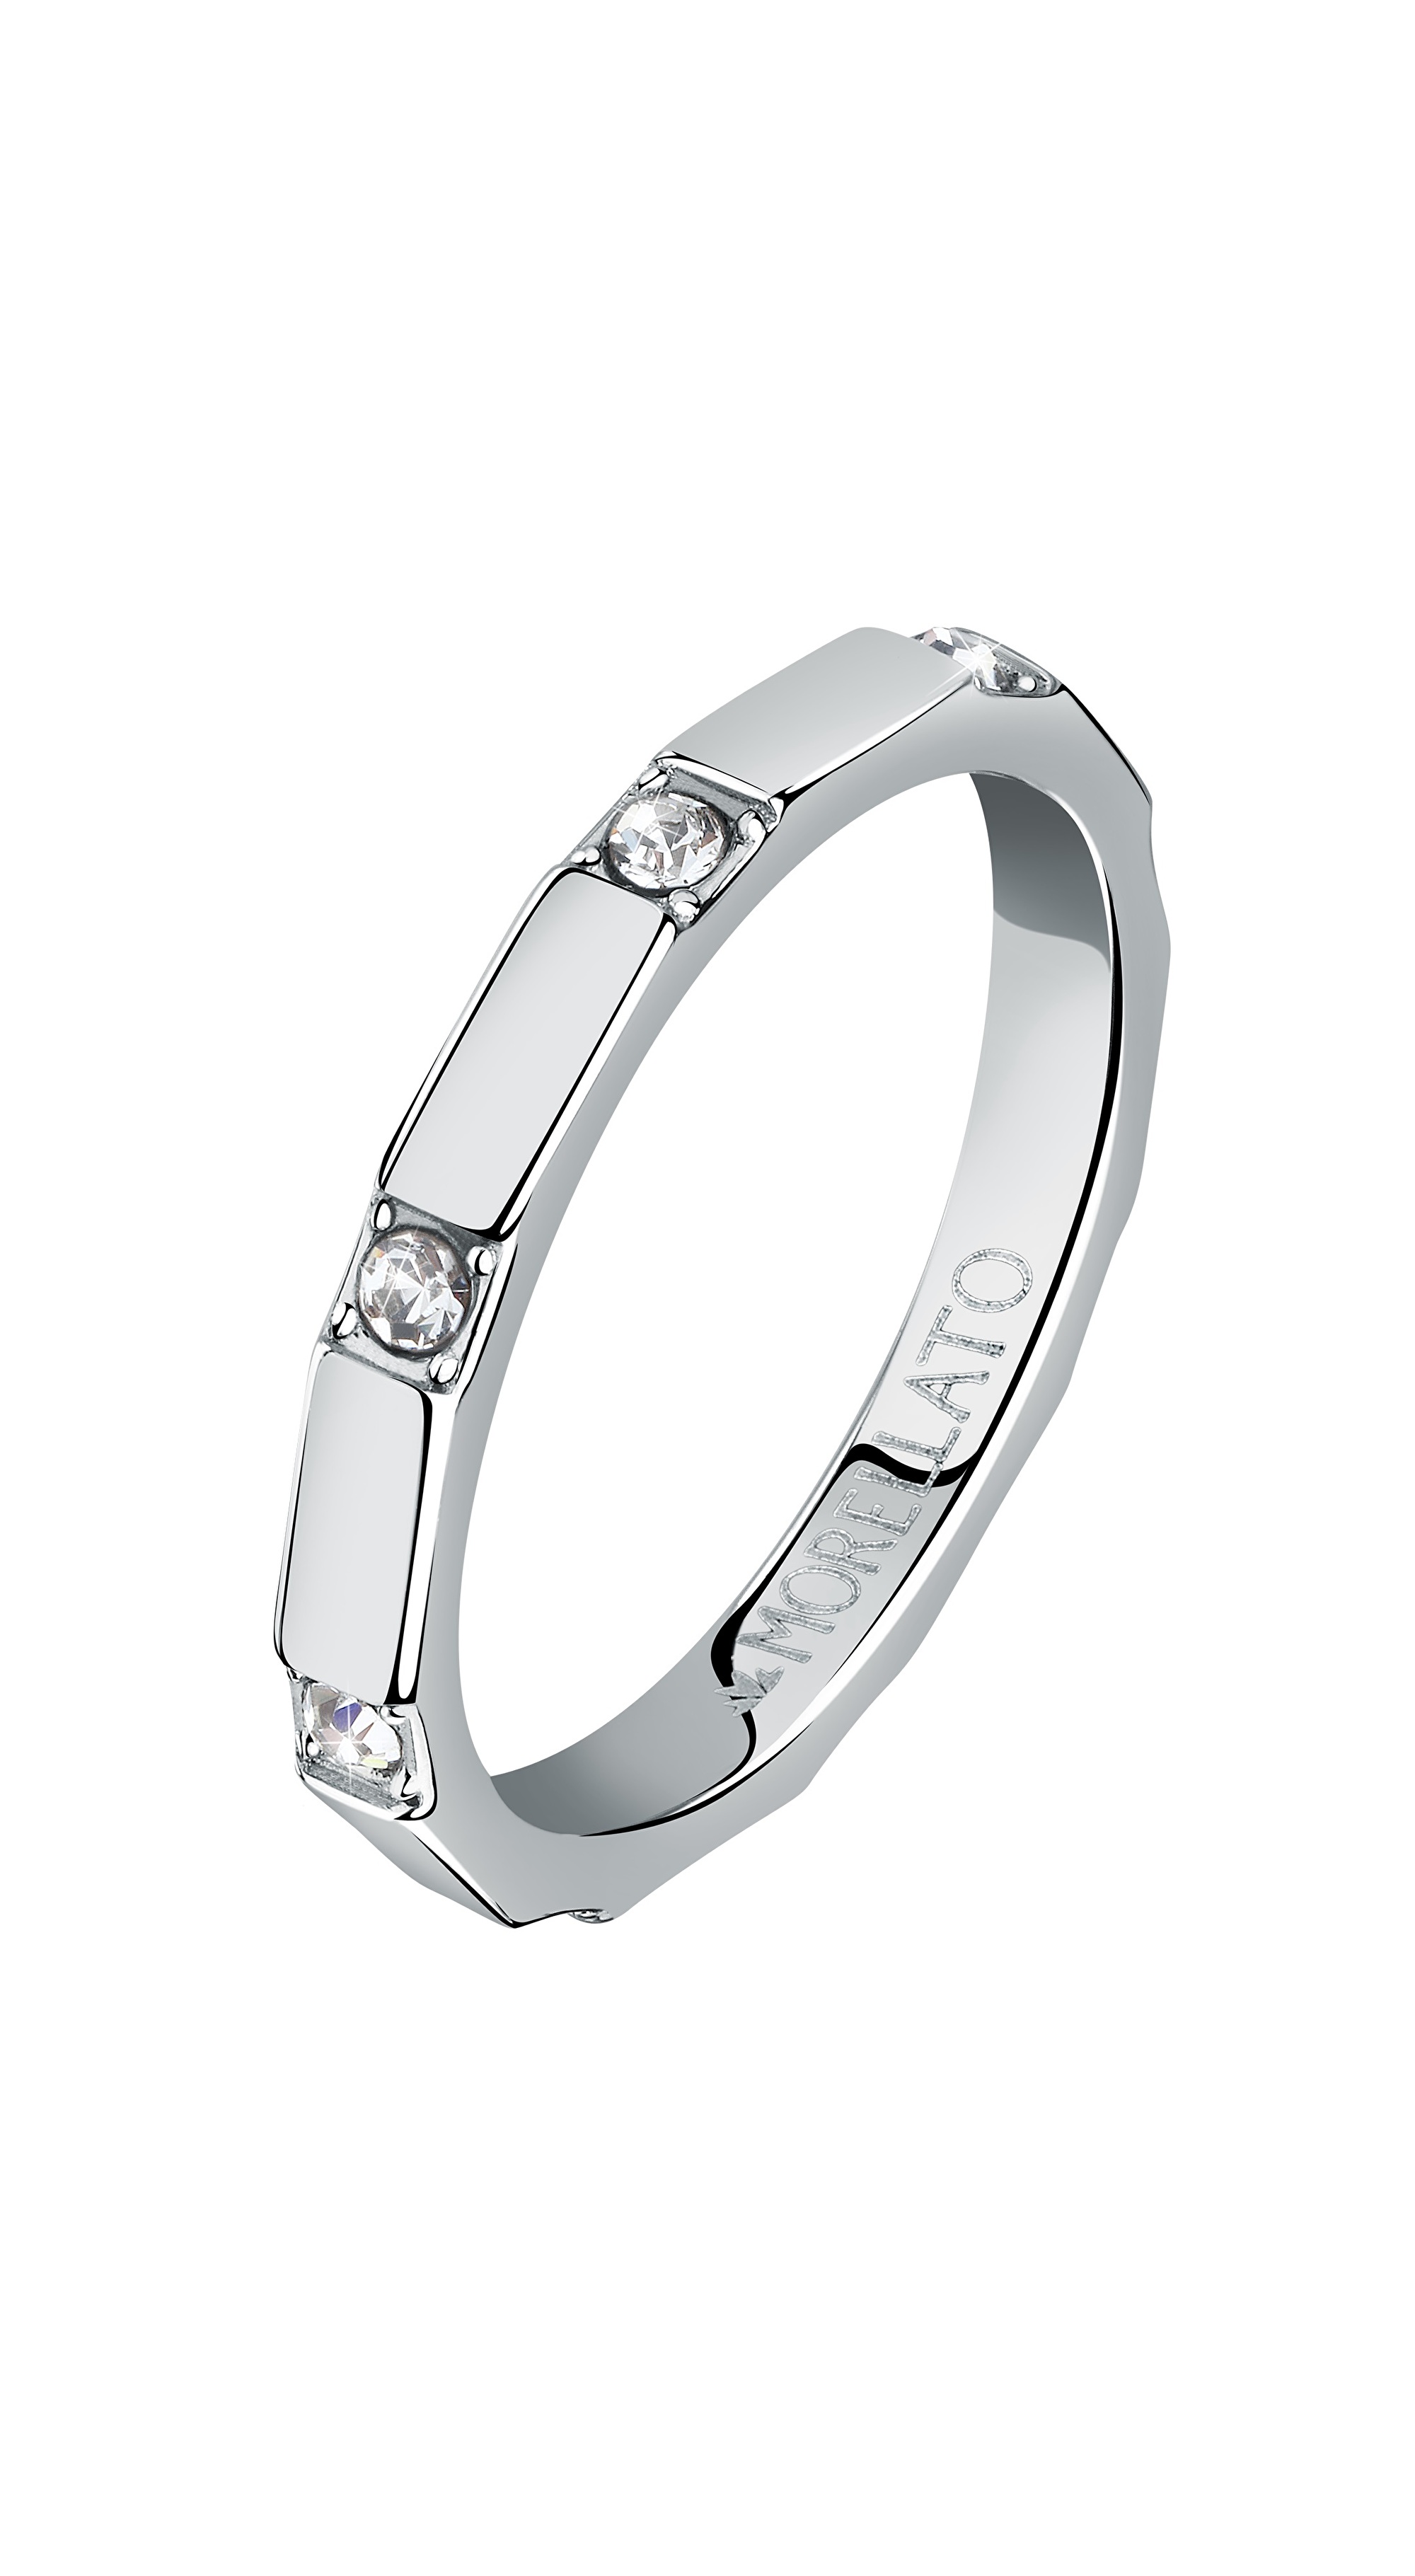 Morellato Stylový ocelový prsten s krystaly Motown SALS85 59 mm